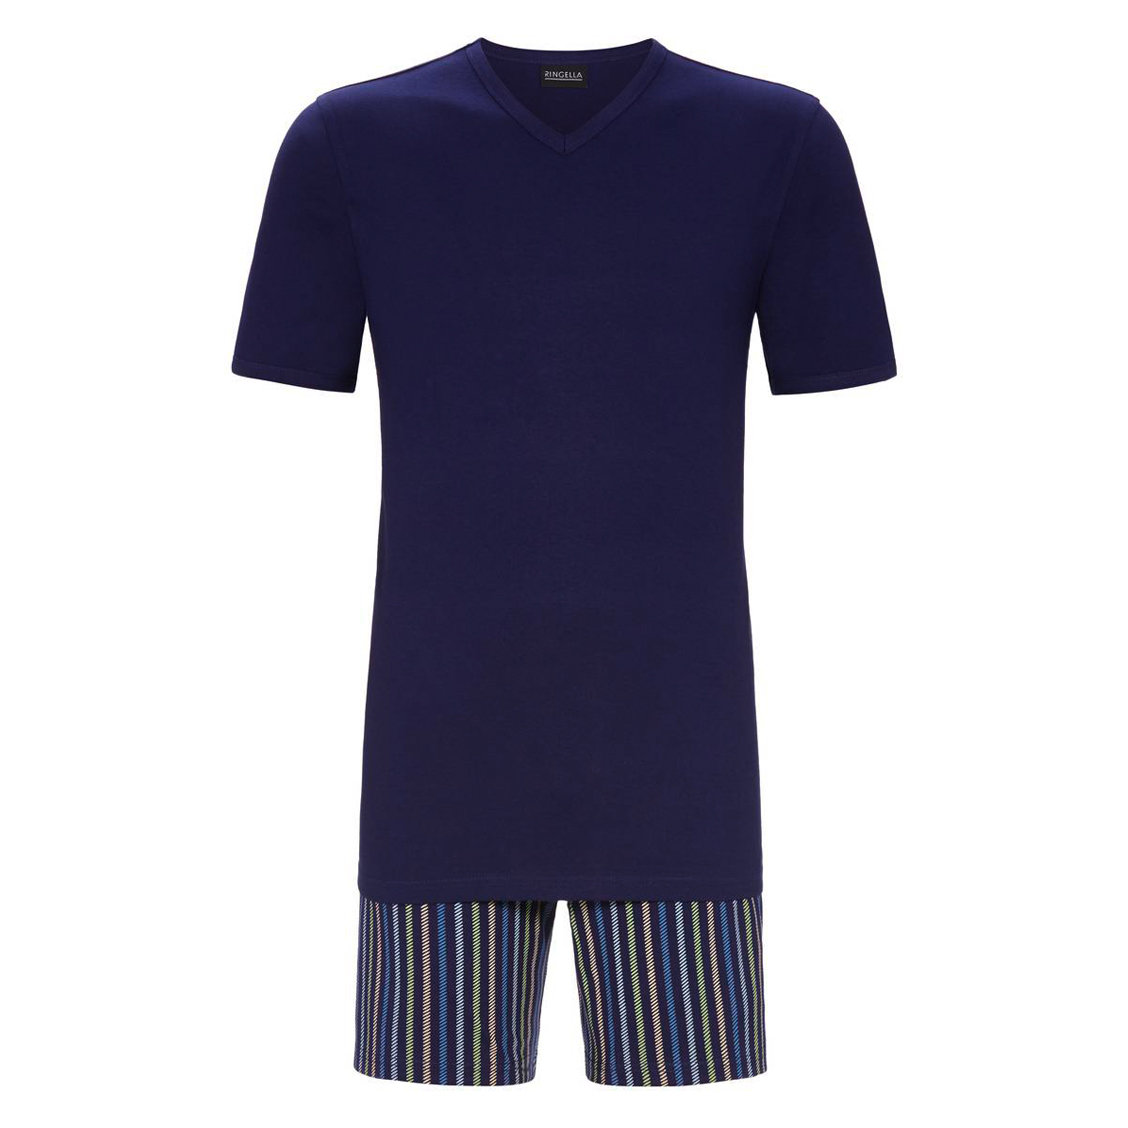 pyjama court ringella en coton : tee-shirt col v bleu nuit et short bleu nuit à rayures vertes, beiges, bleu marine et bleu clair